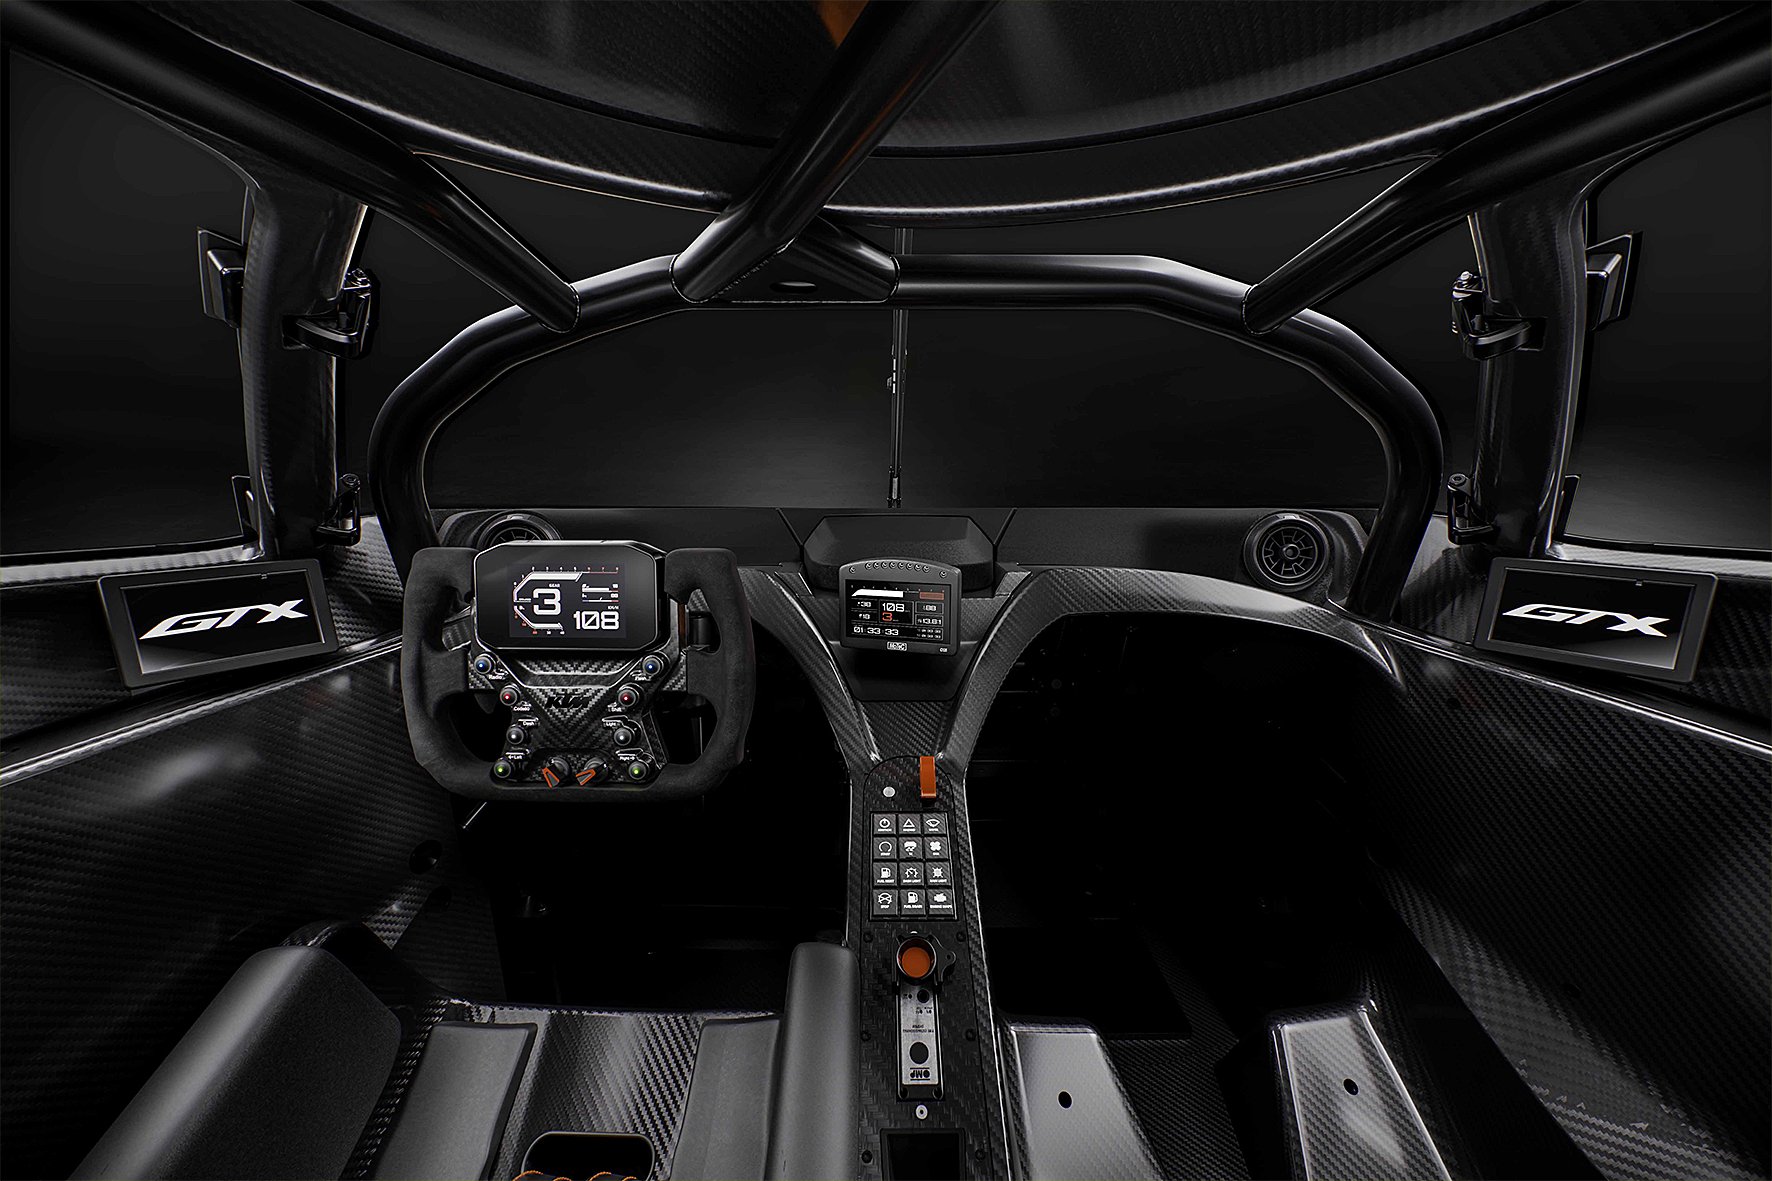 KTM X-BOW interior - Cockpit